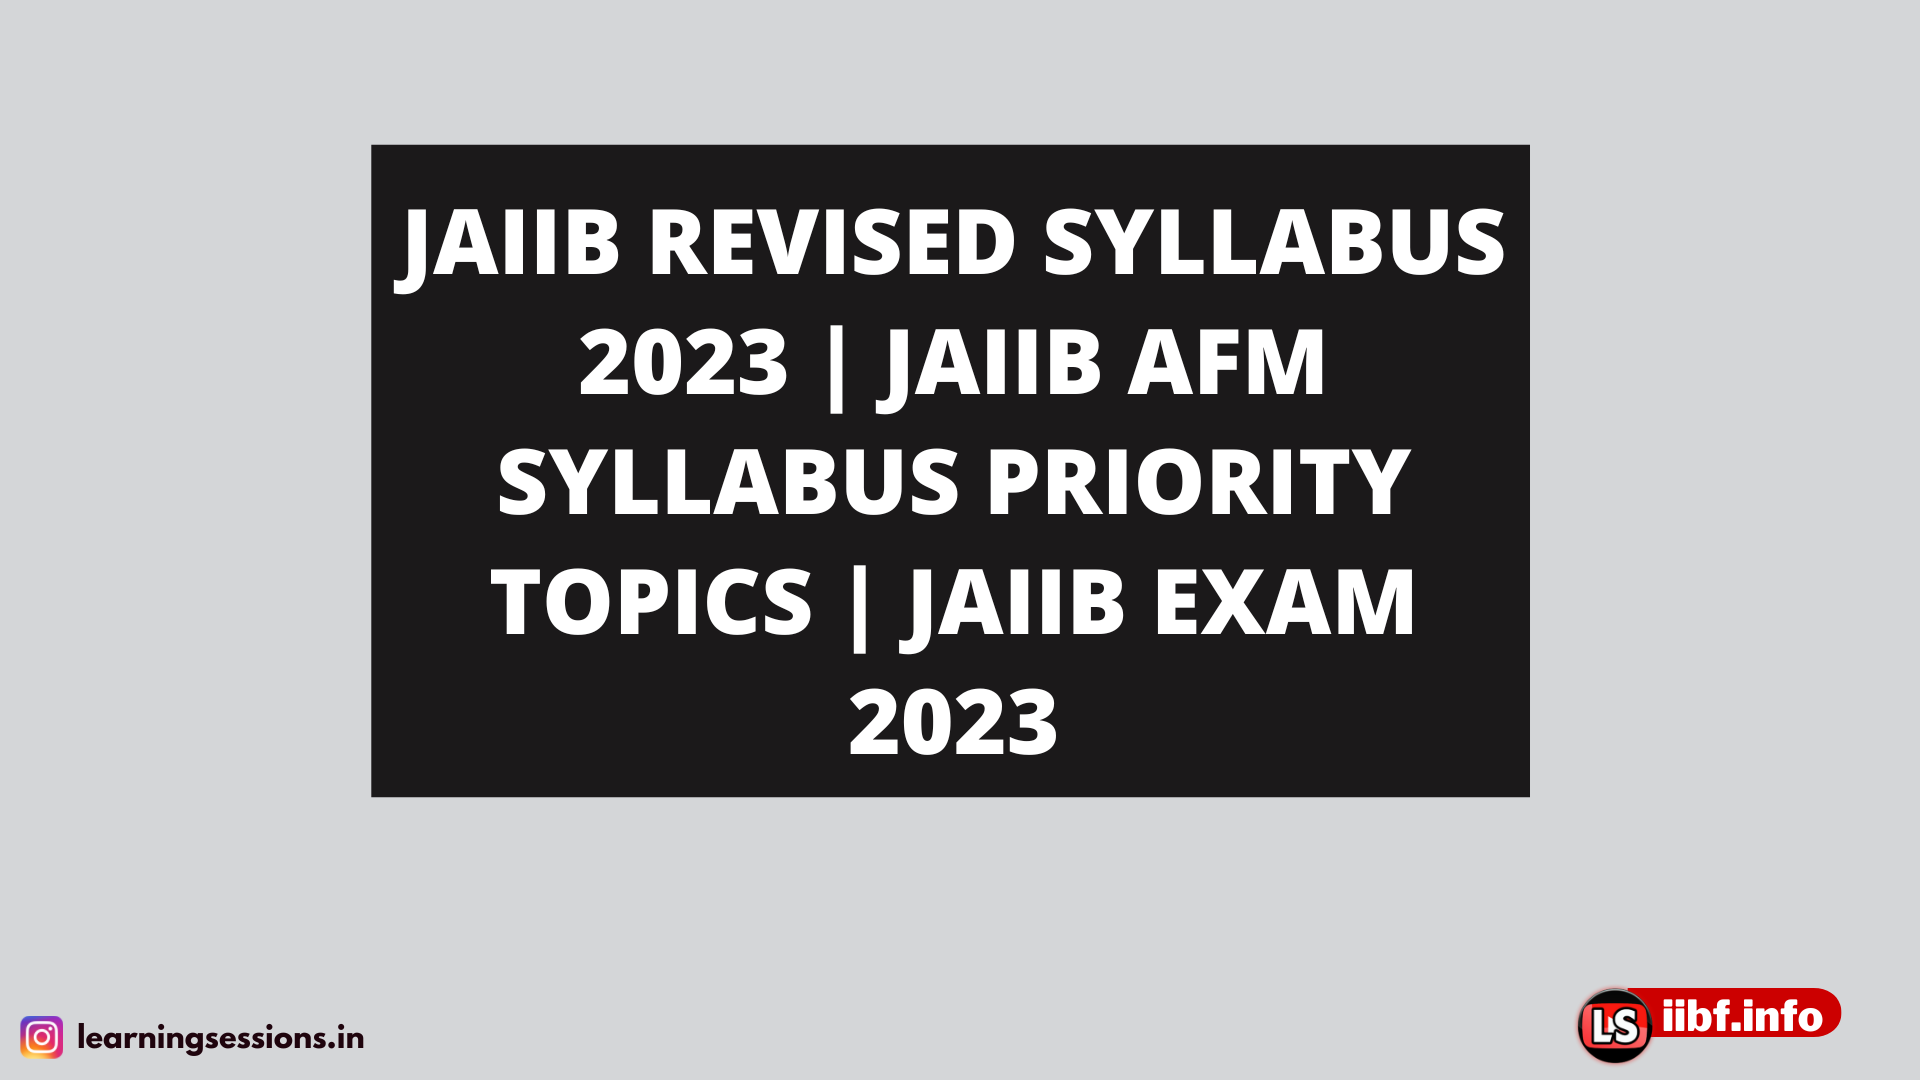 JAIIB REVISED SYLLABUS 2023 | JAIIB AFM SYLLABUS PRIORITY TOPICS | JAIIB EXAM 2023